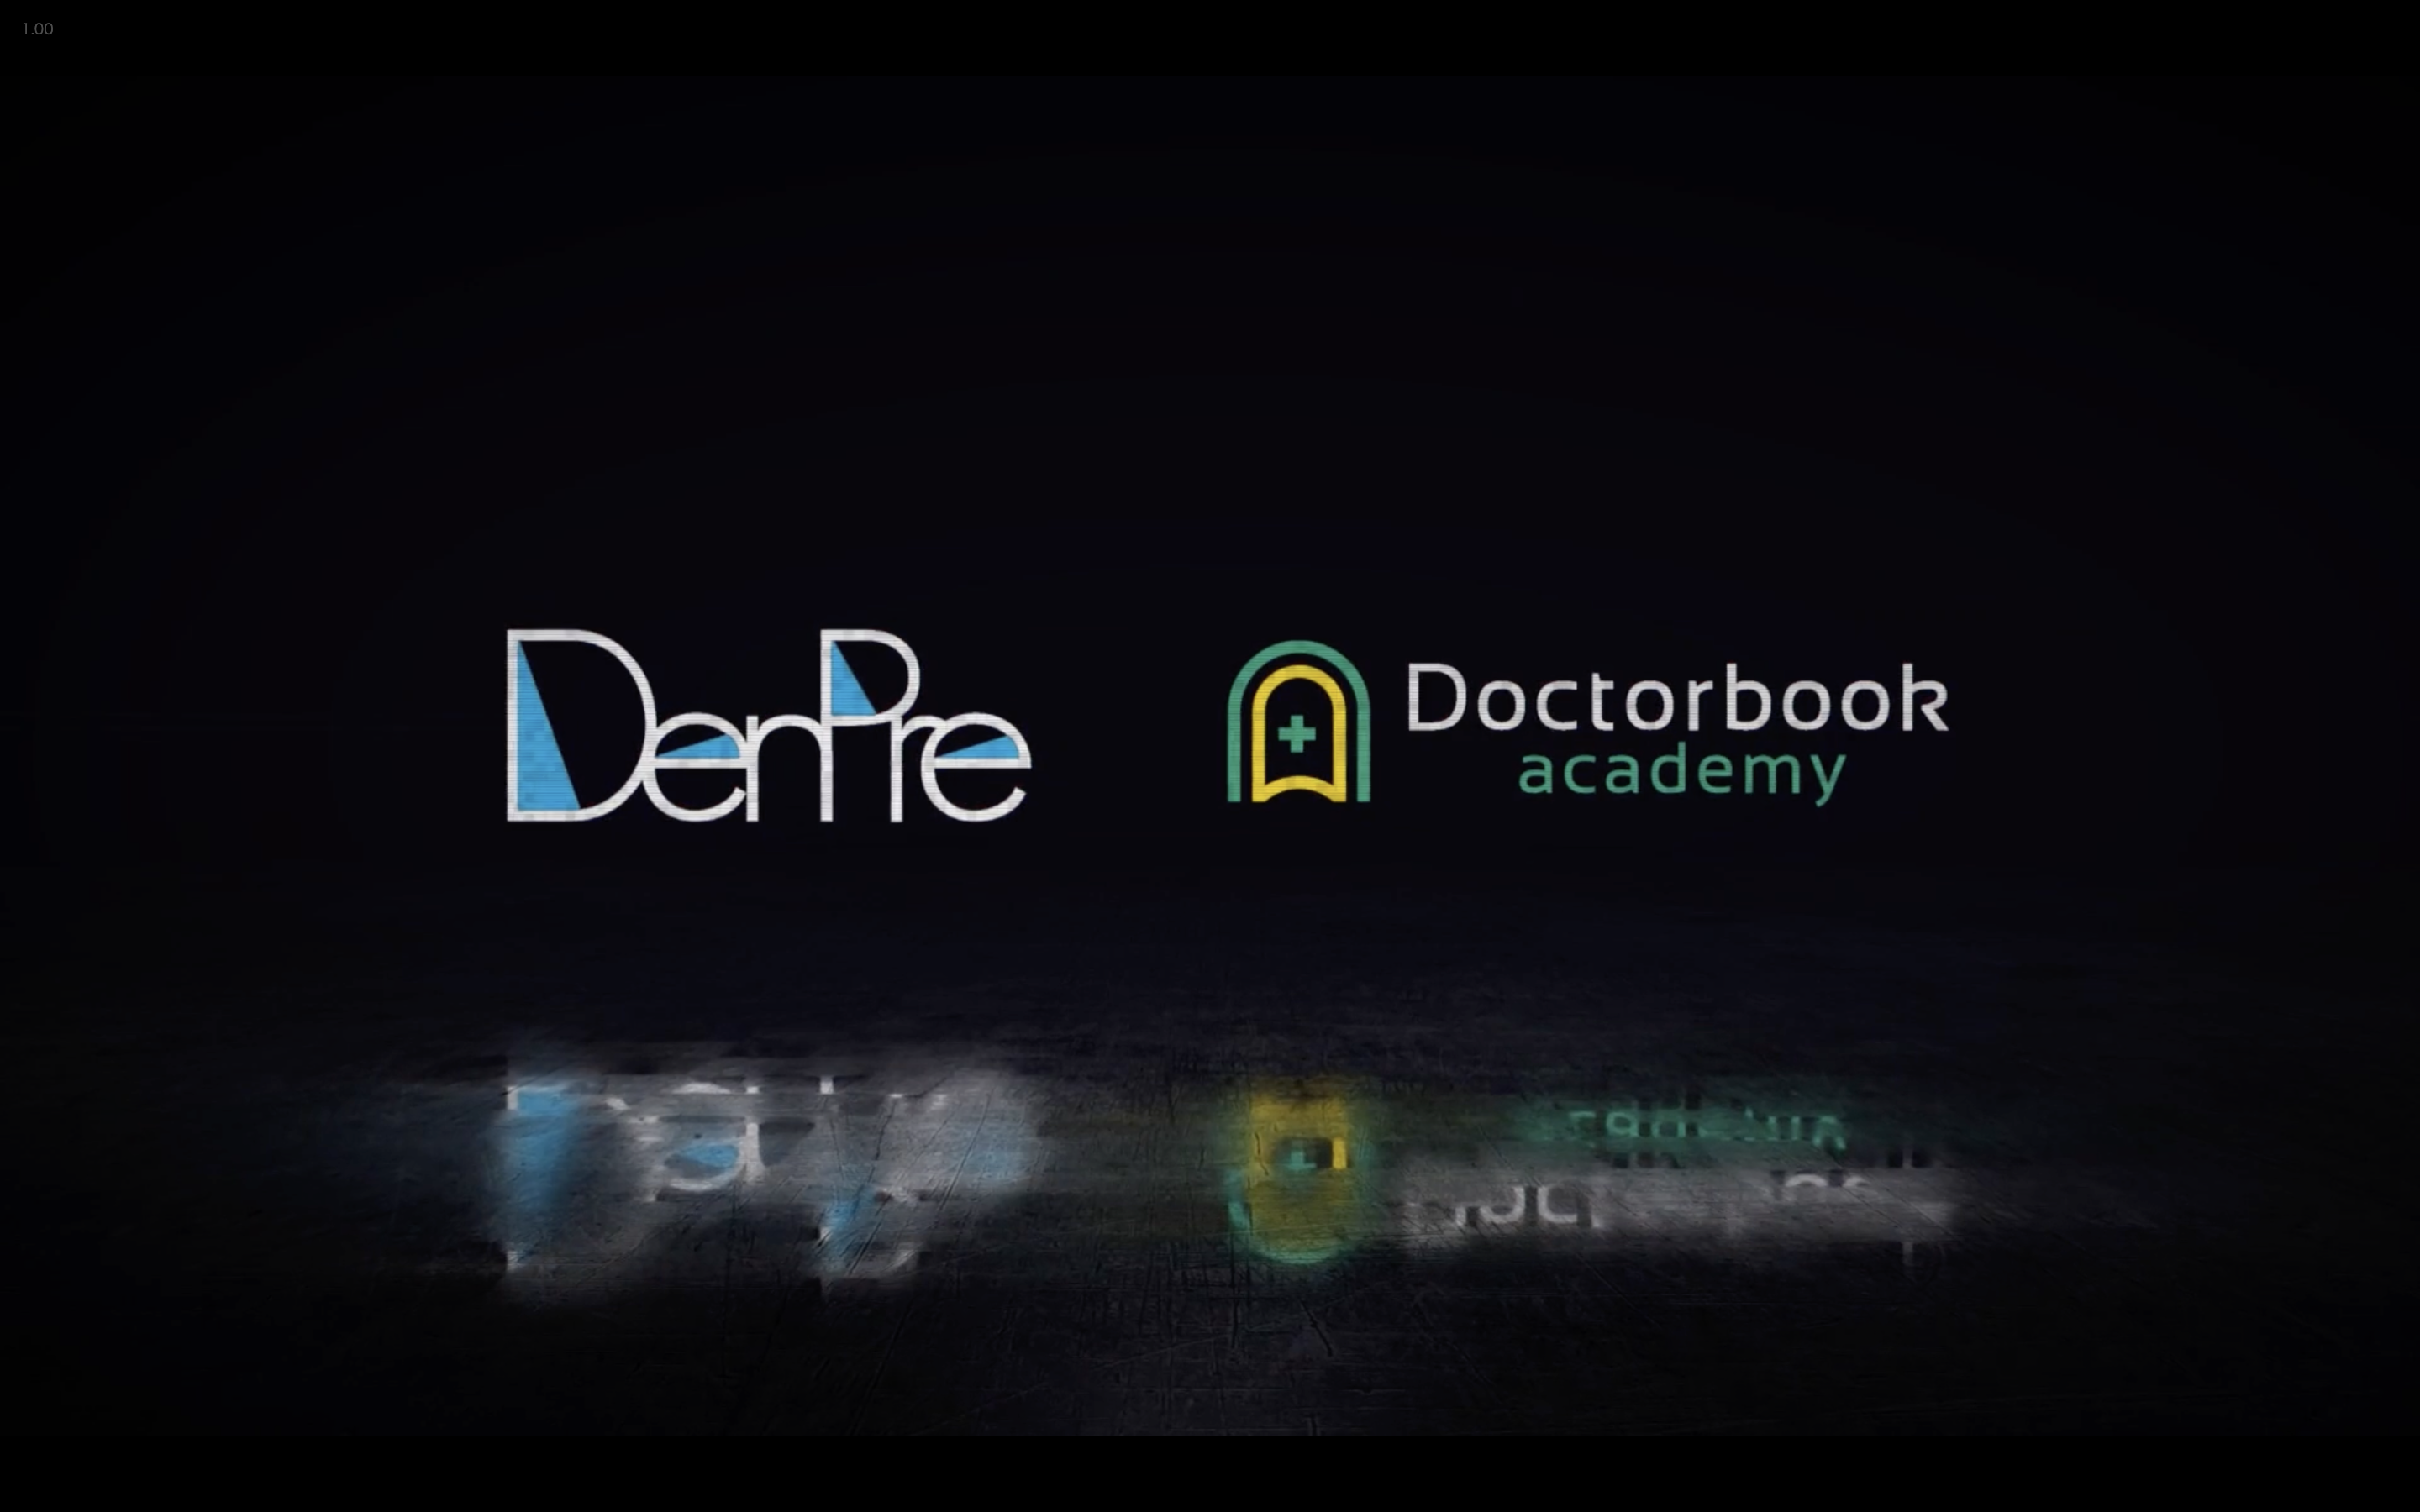 DenPre × Doctorbook